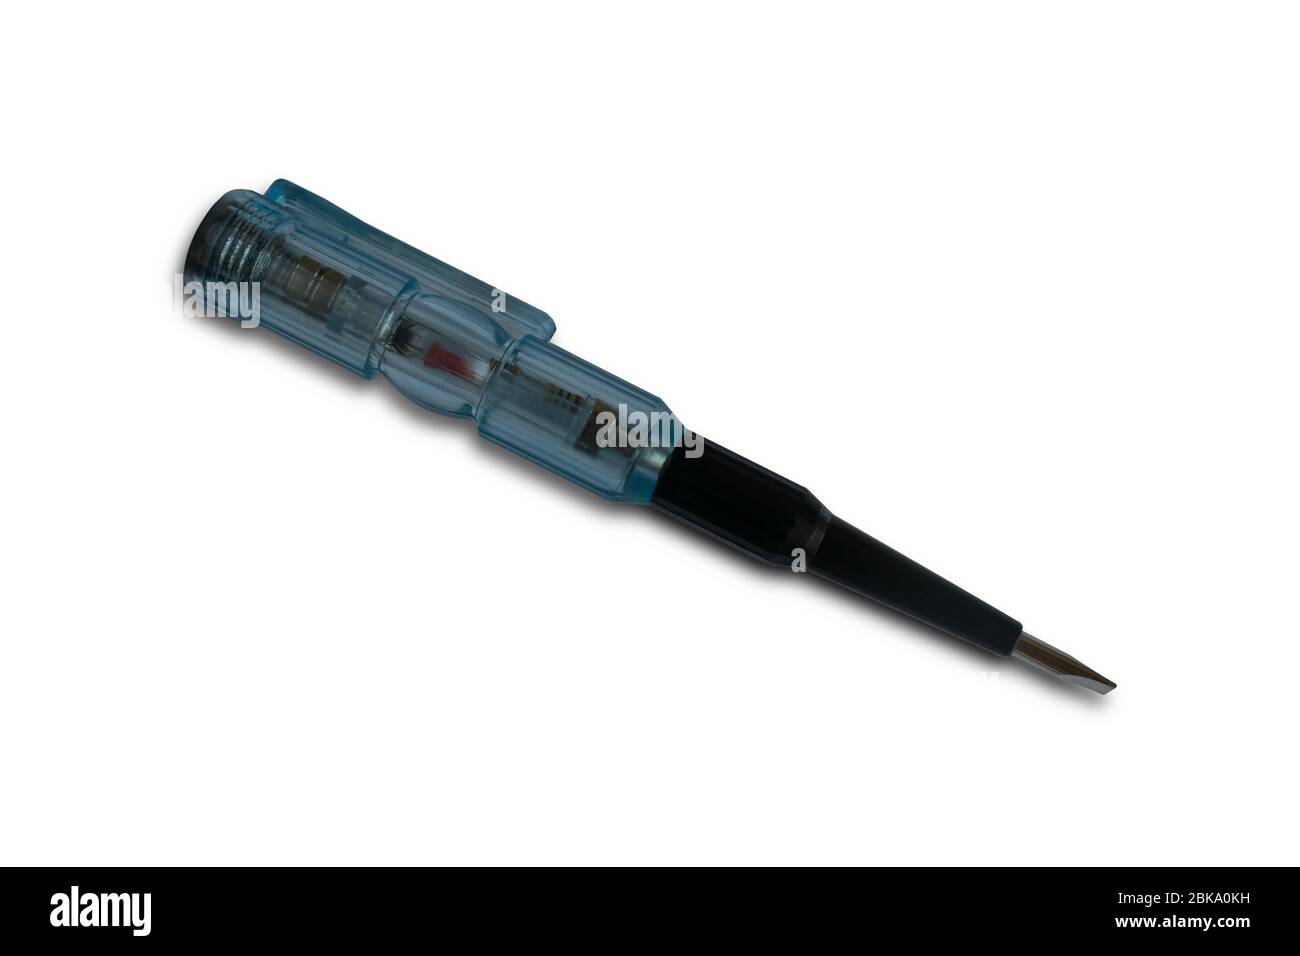 indicator screwdriver on isolated background Stock Photo